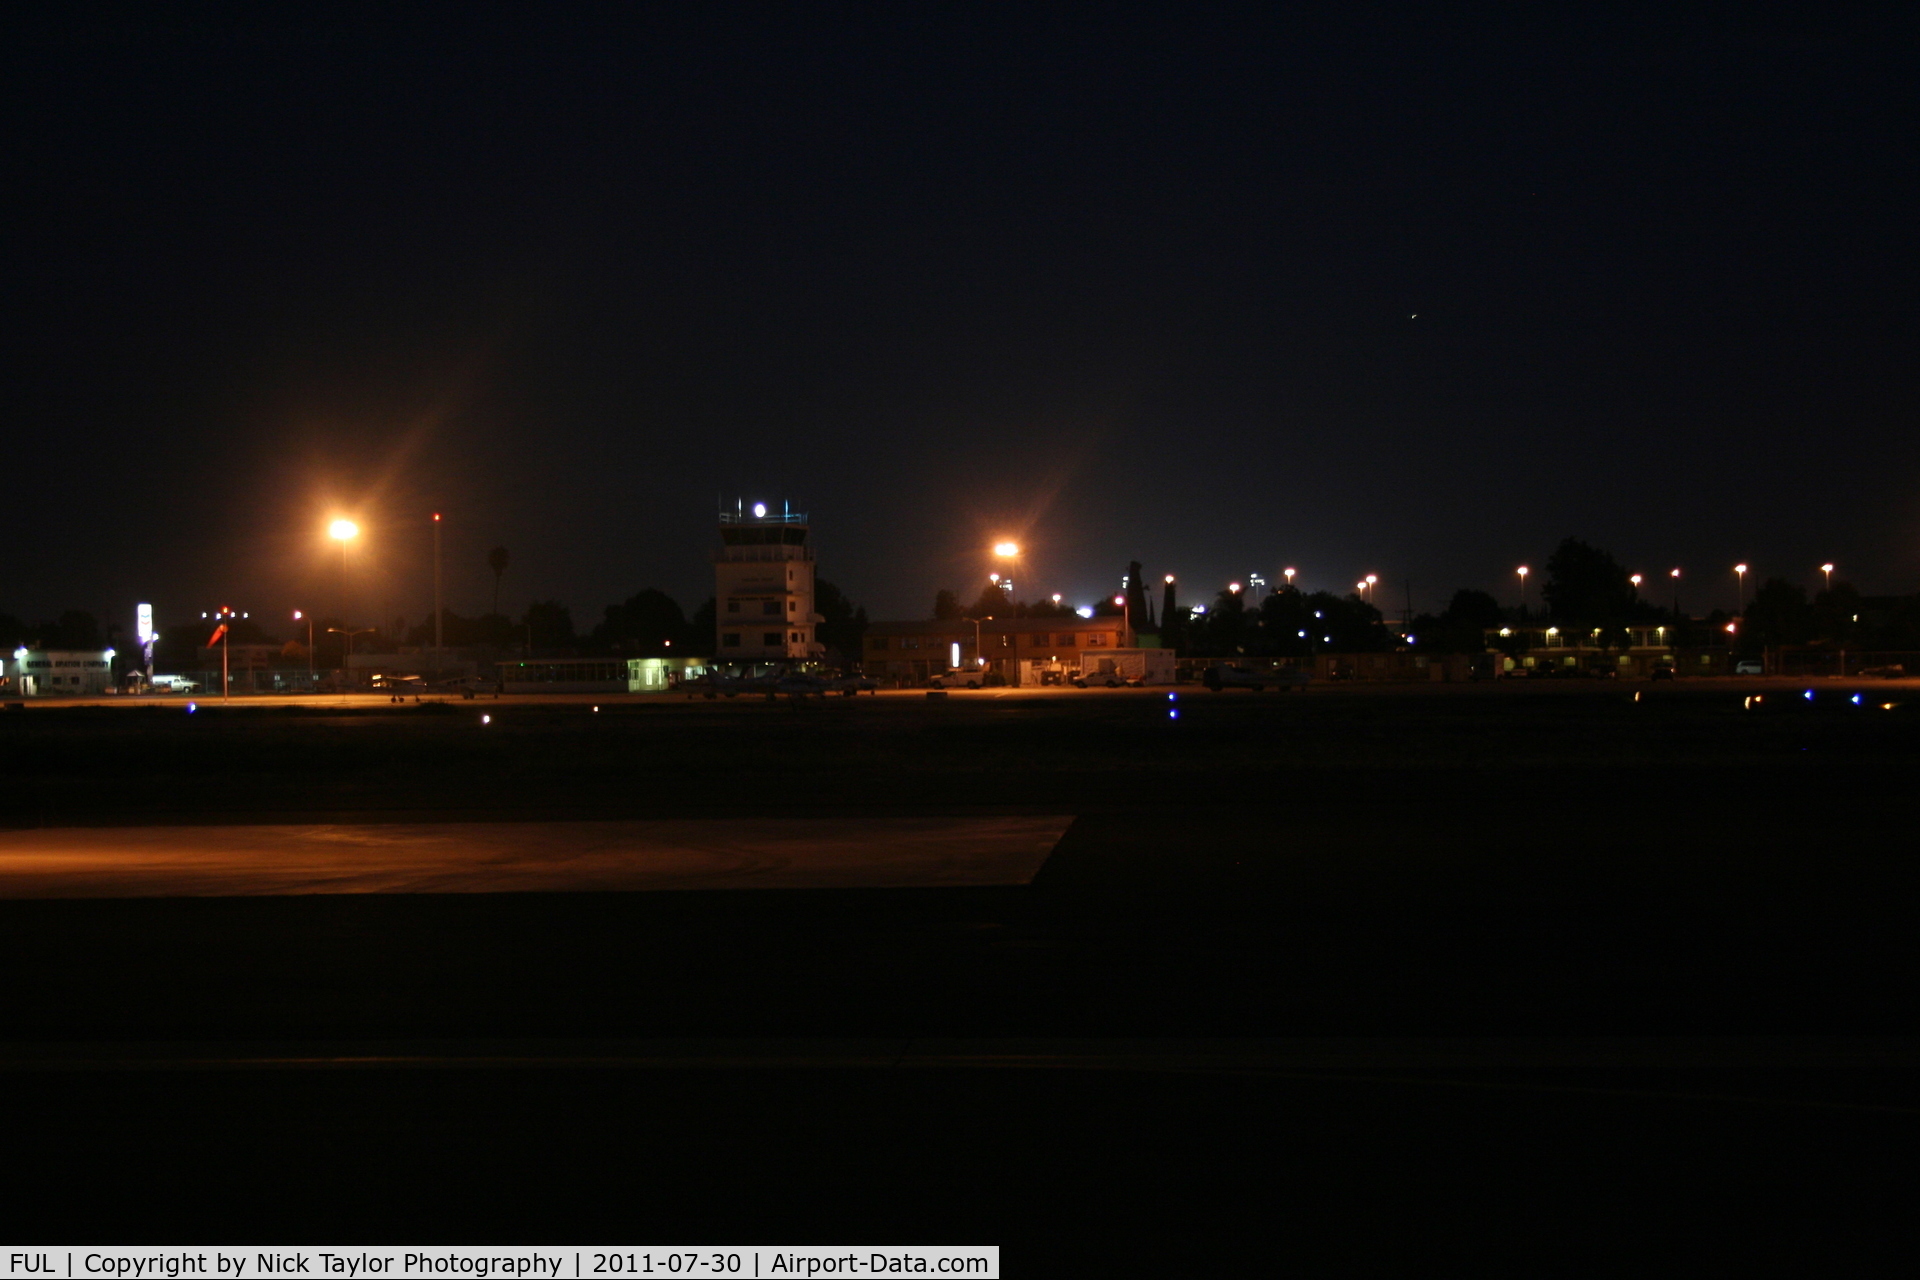 Fullerton Municipal Airport (FUL) - Fullerton tower at night